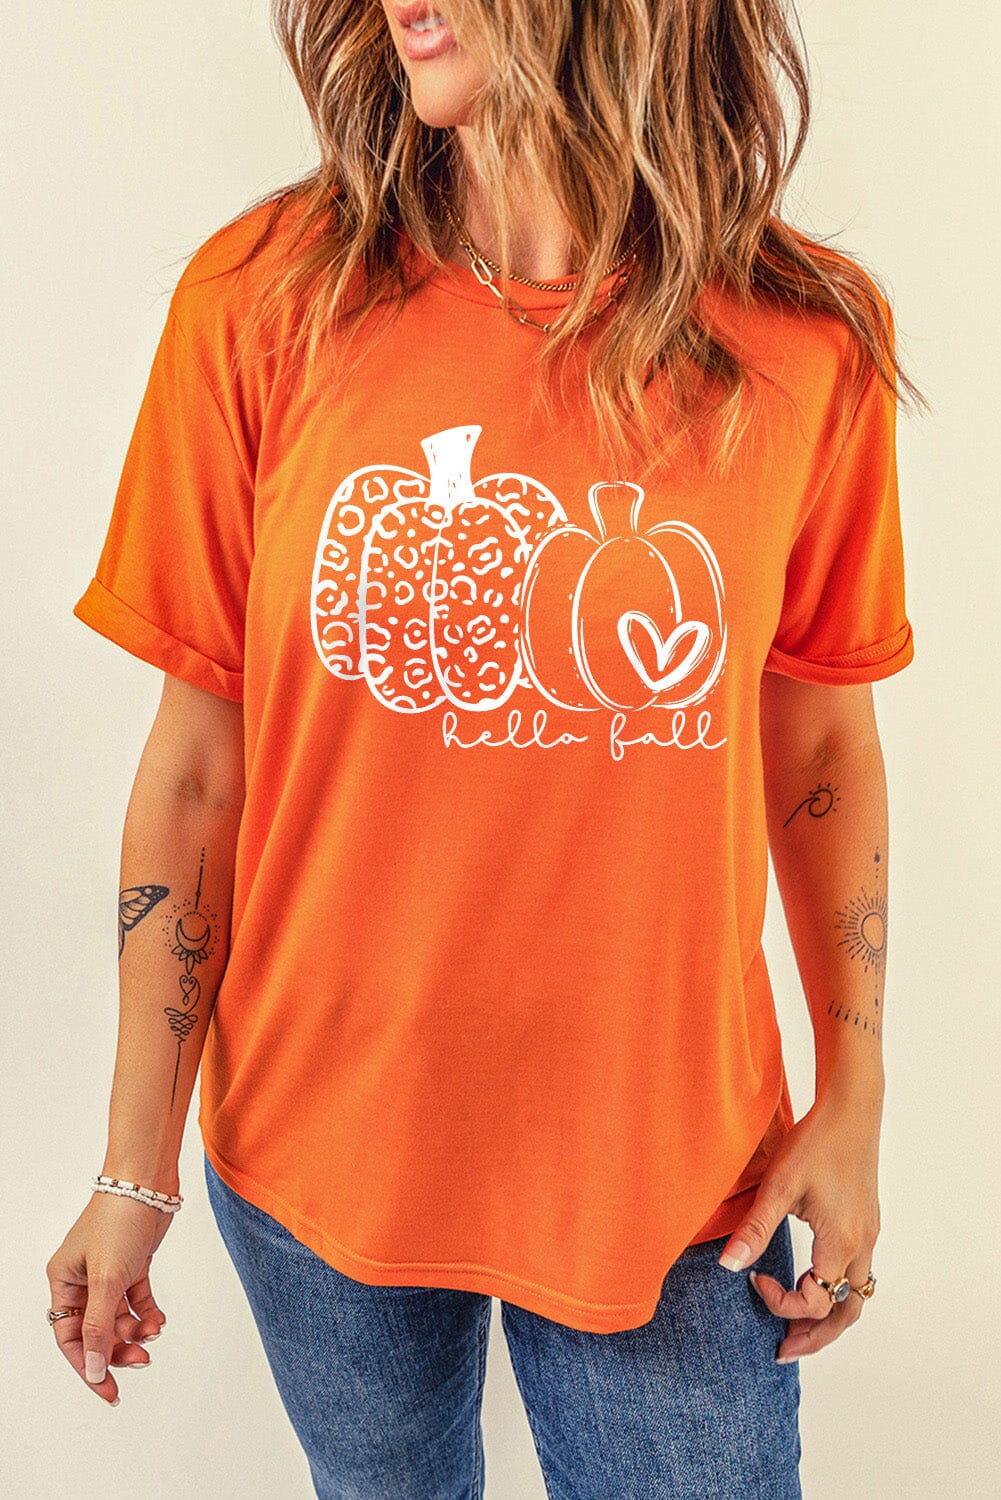 HELLO FALL Pumpkin Graphic T-Shirt - Sydney So Sweet